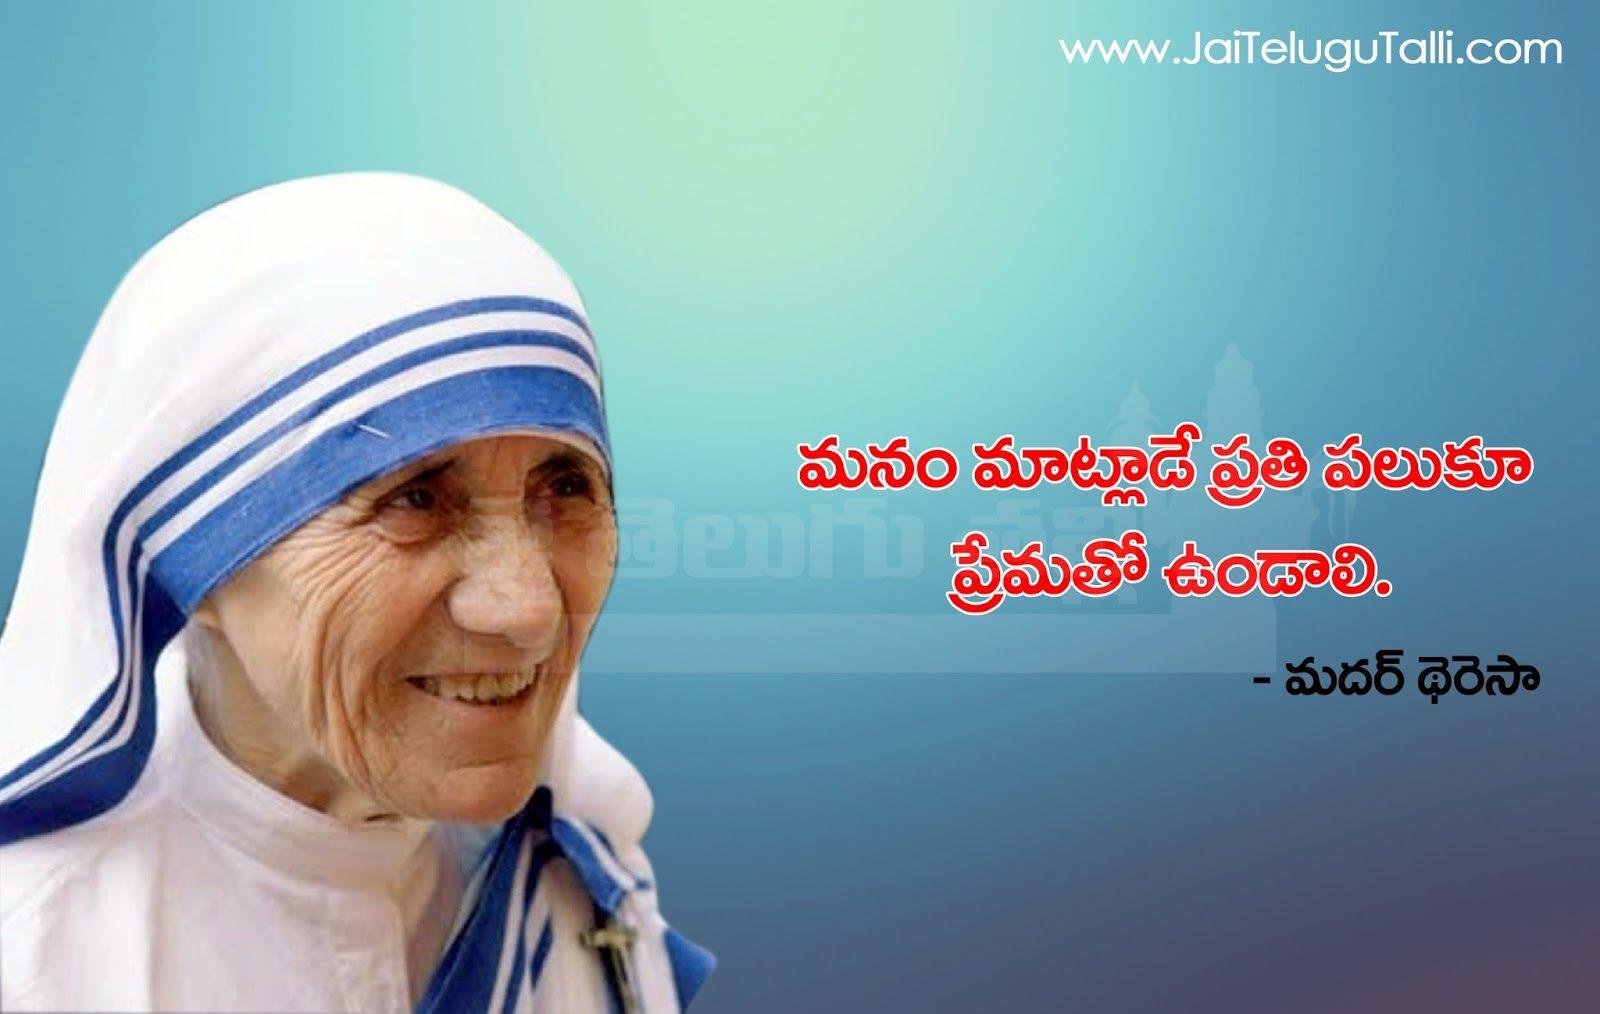 Mother Teresa Palukulu Image Best Telugu Quotations and Sayings